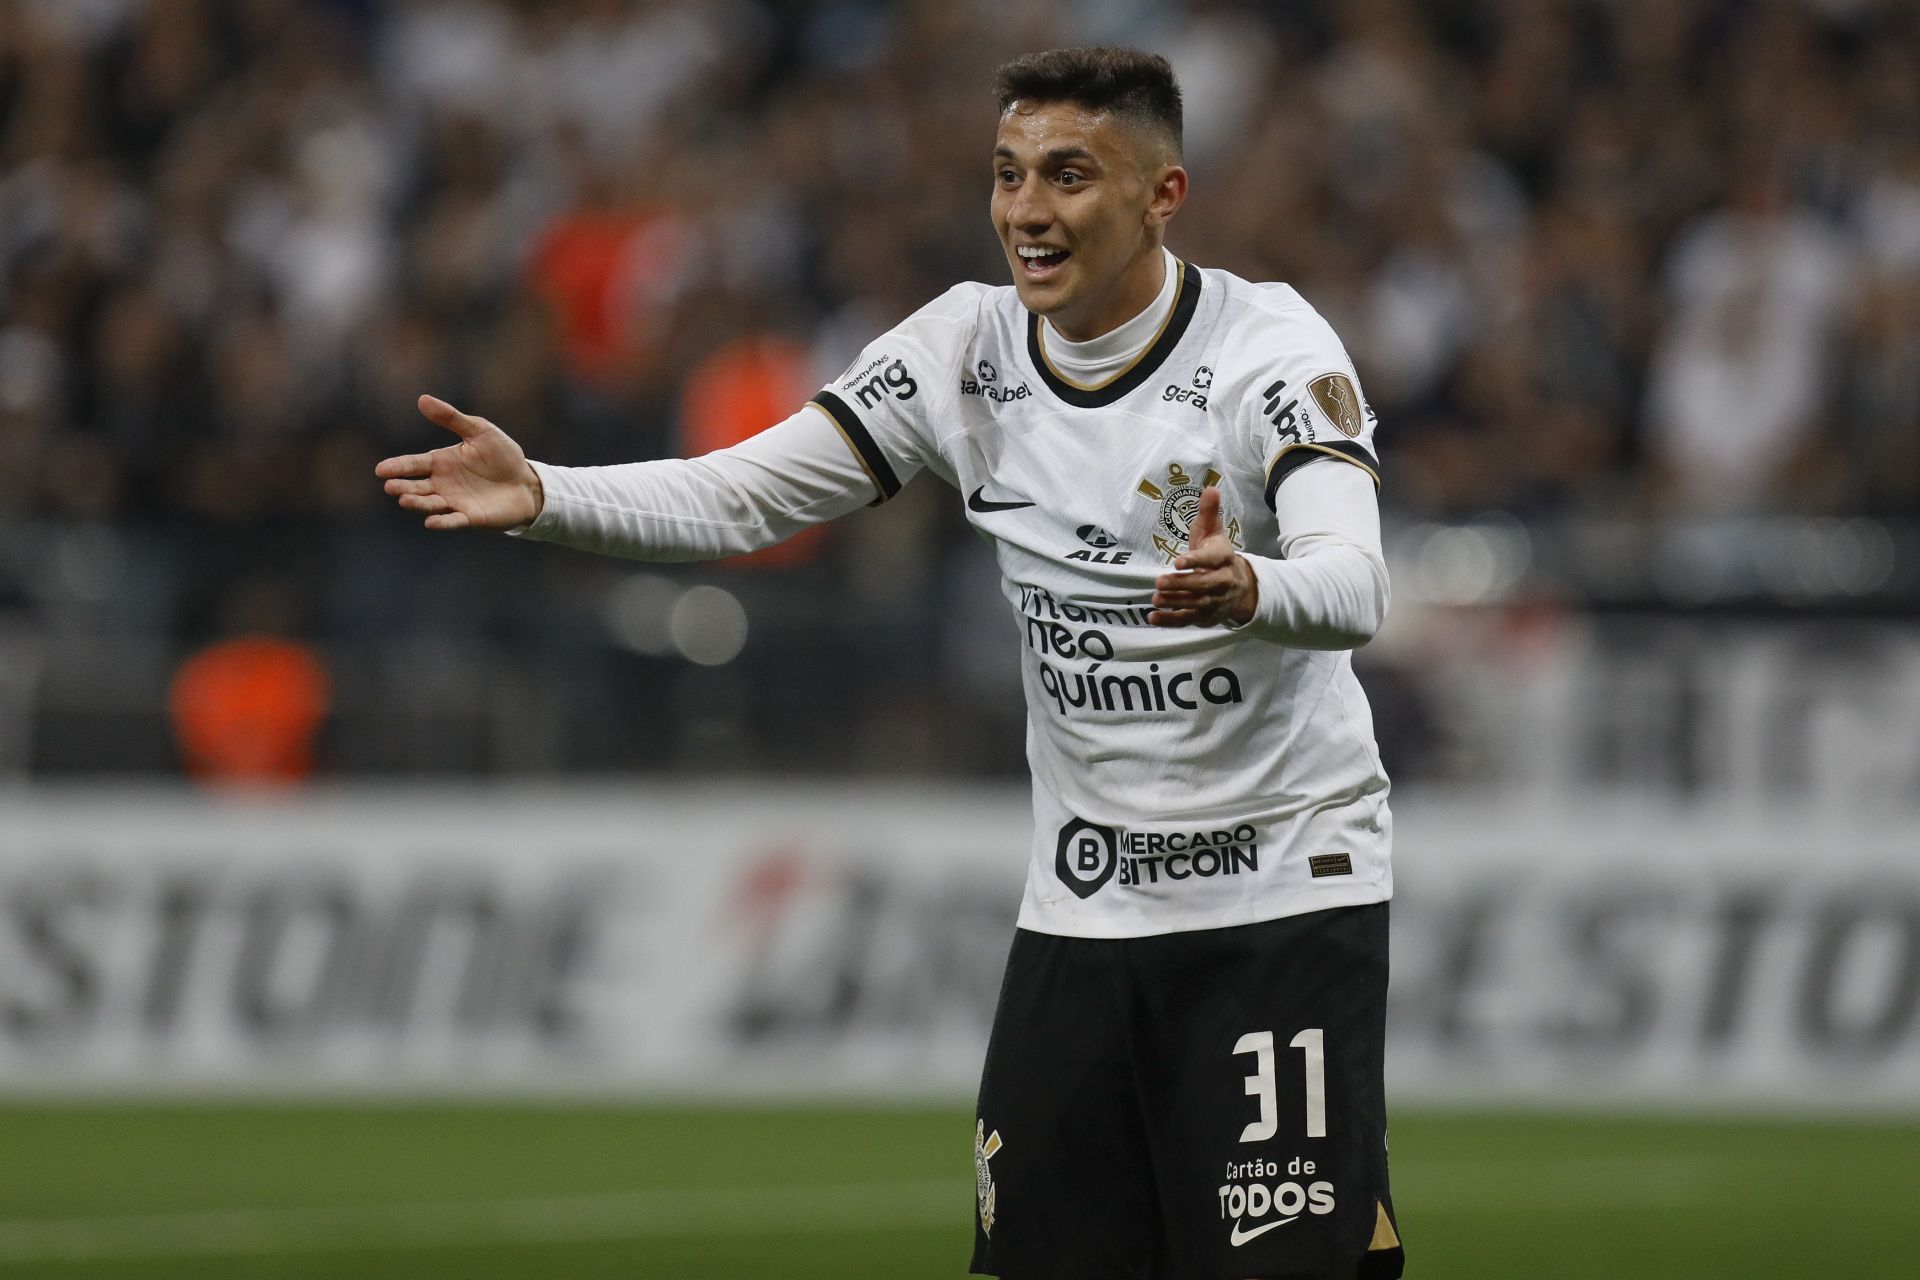 Corinthians will be looking to return to winning ways here